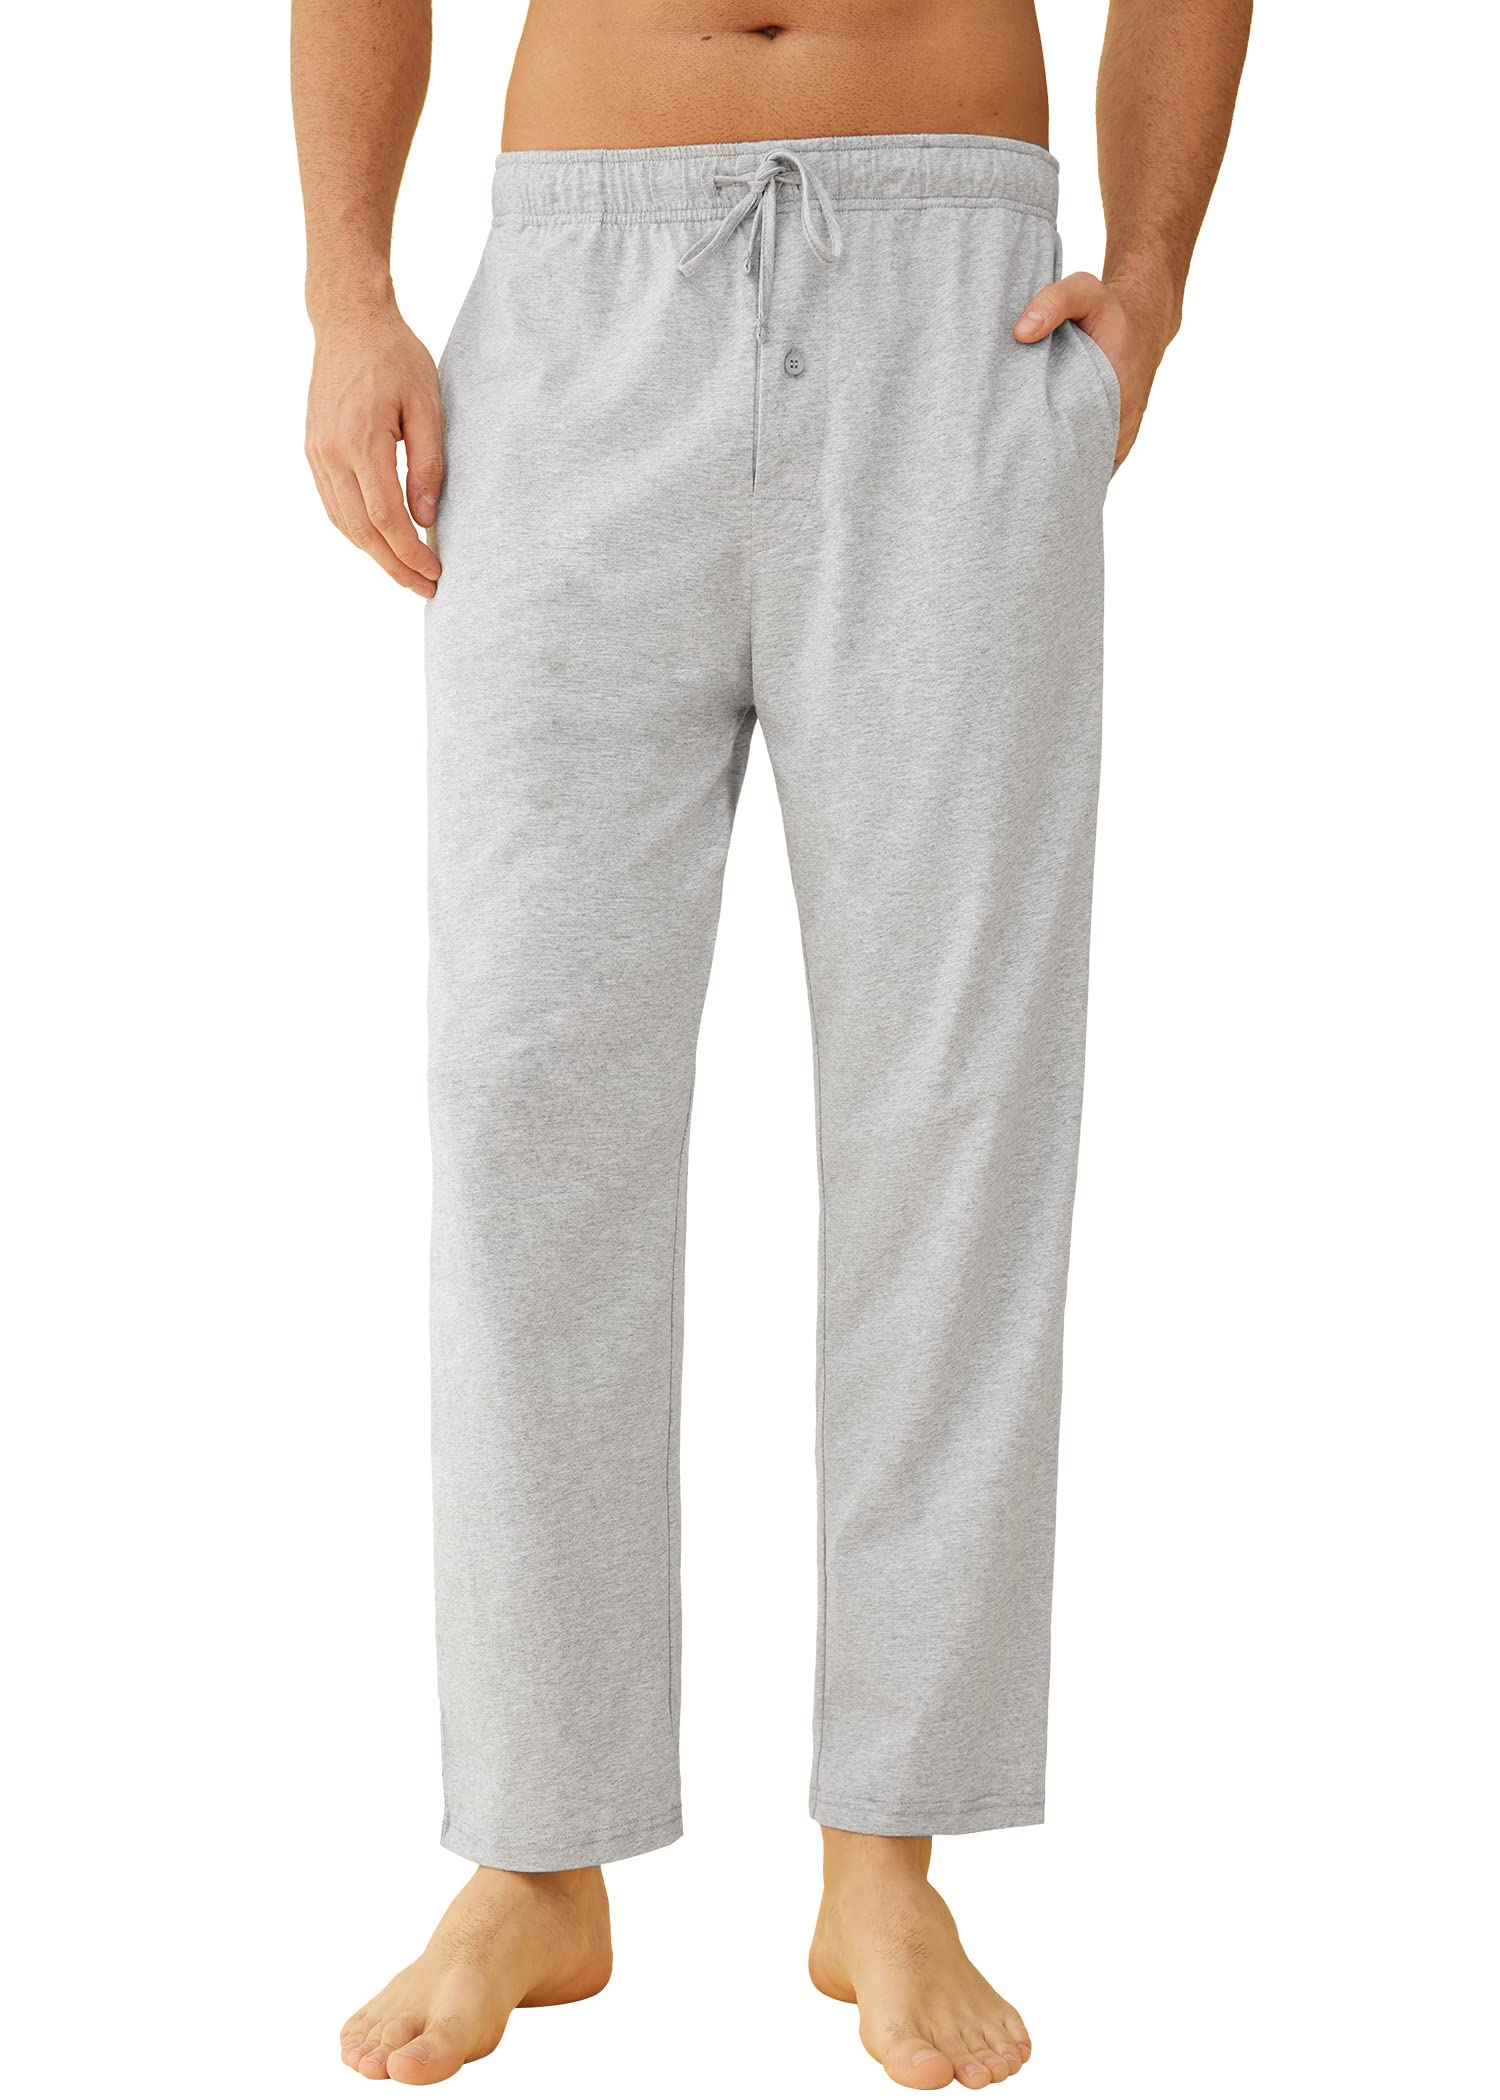 Willit Men's Cotton Yoga Sweatpants Exercise Pants Open Bottom Athletic Lounge  Pants Loose Male Sweat Pants with Pockets Khaki Large